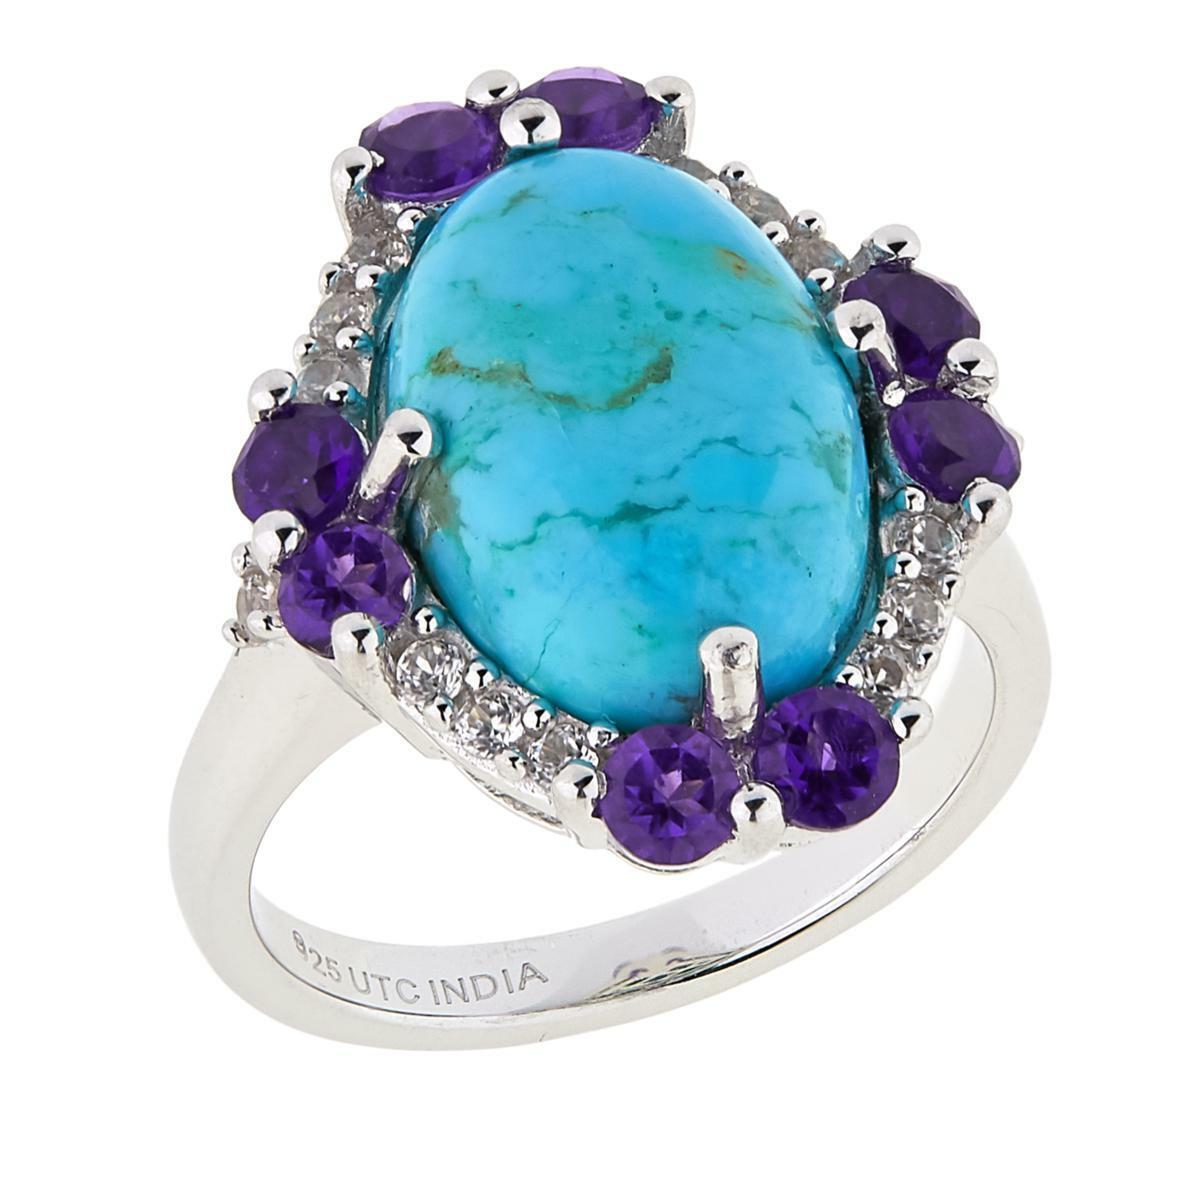 Paul Deasy Gem Kingman Turquoise, Amethyst and White Zircon Ring Size 8 HSN $136